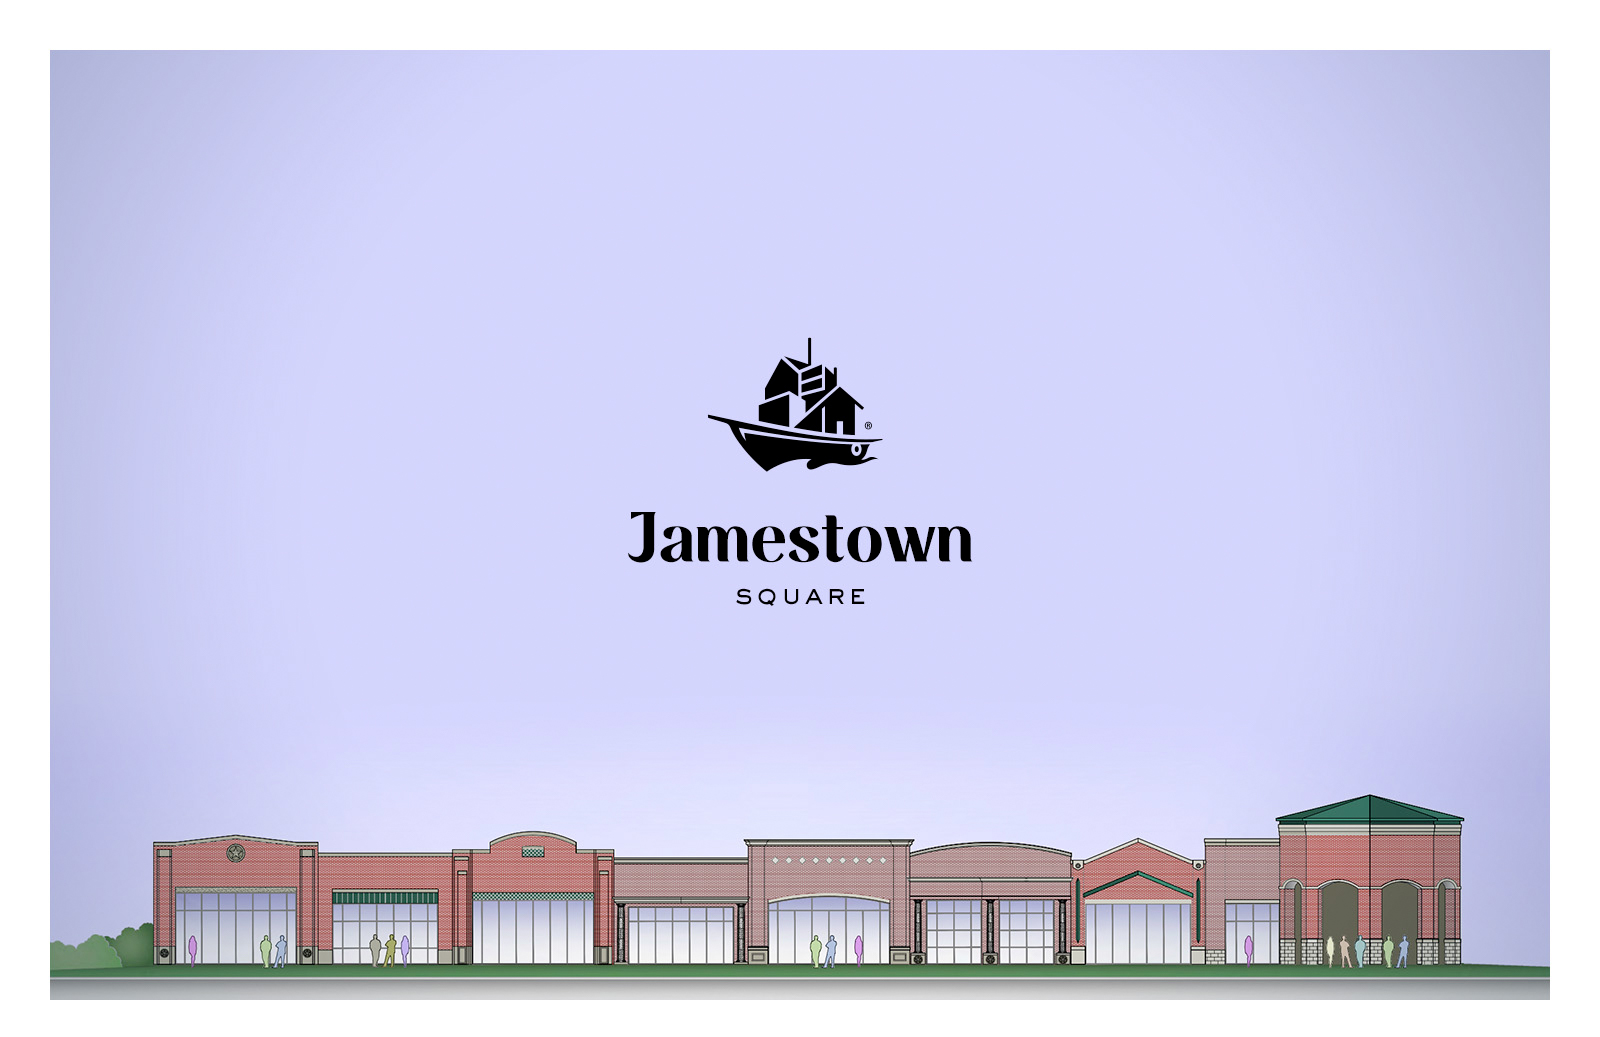 Jamestown Square